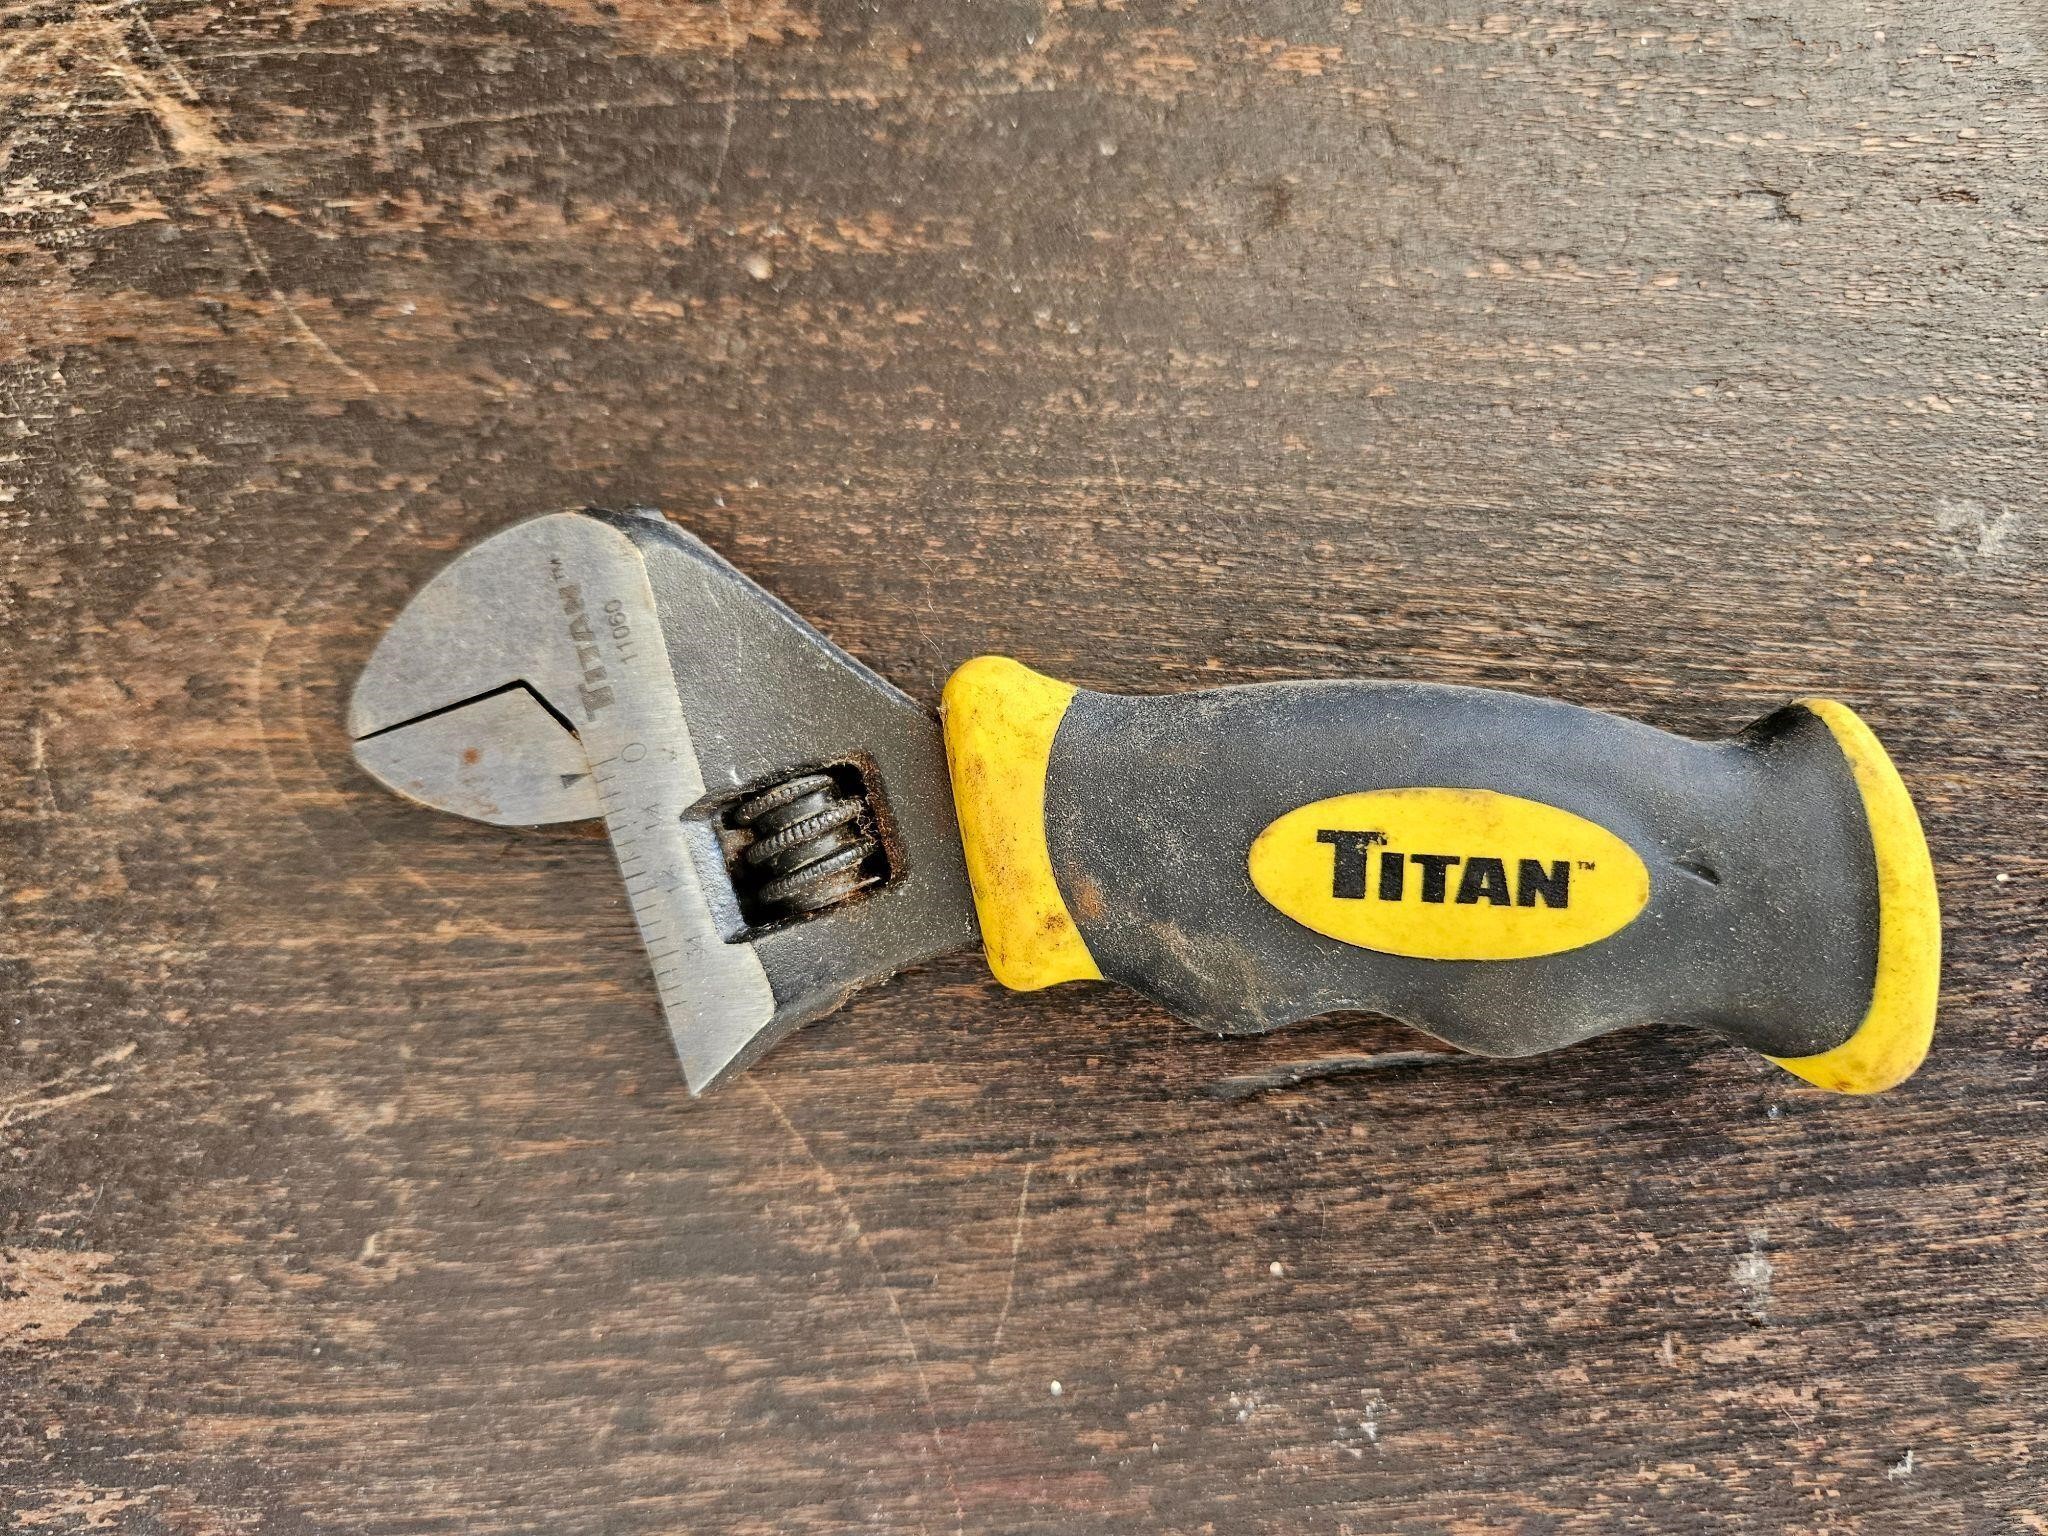 Titan Crescent Wrench